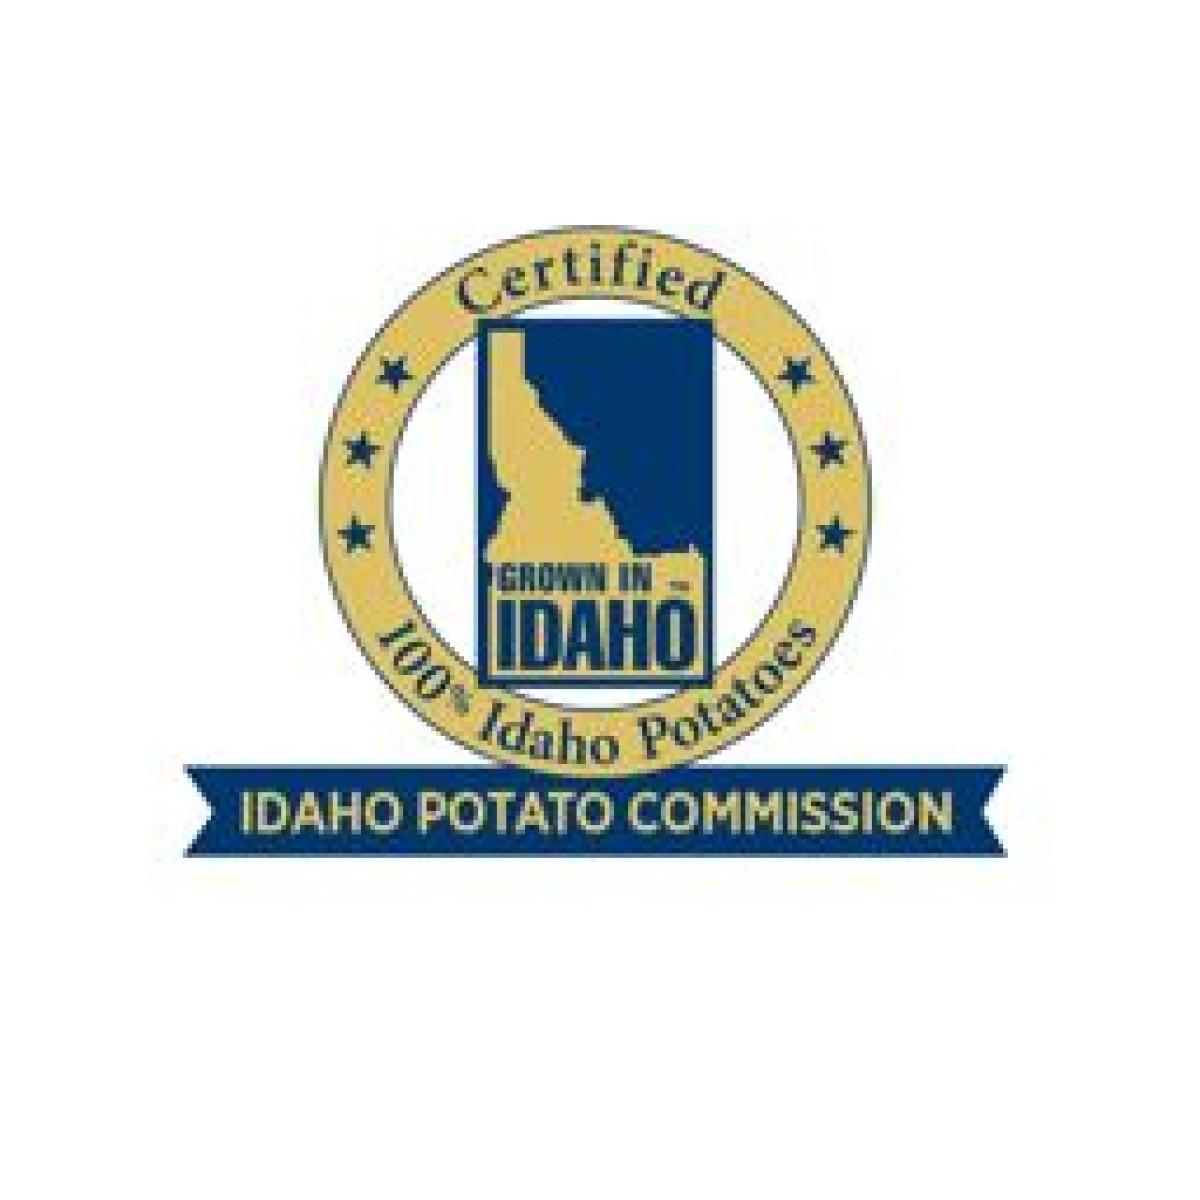 https://www.fb101.com/wp-content/uploads/2015/12/Idaho-Potato-Comission-1200x1200.jpg